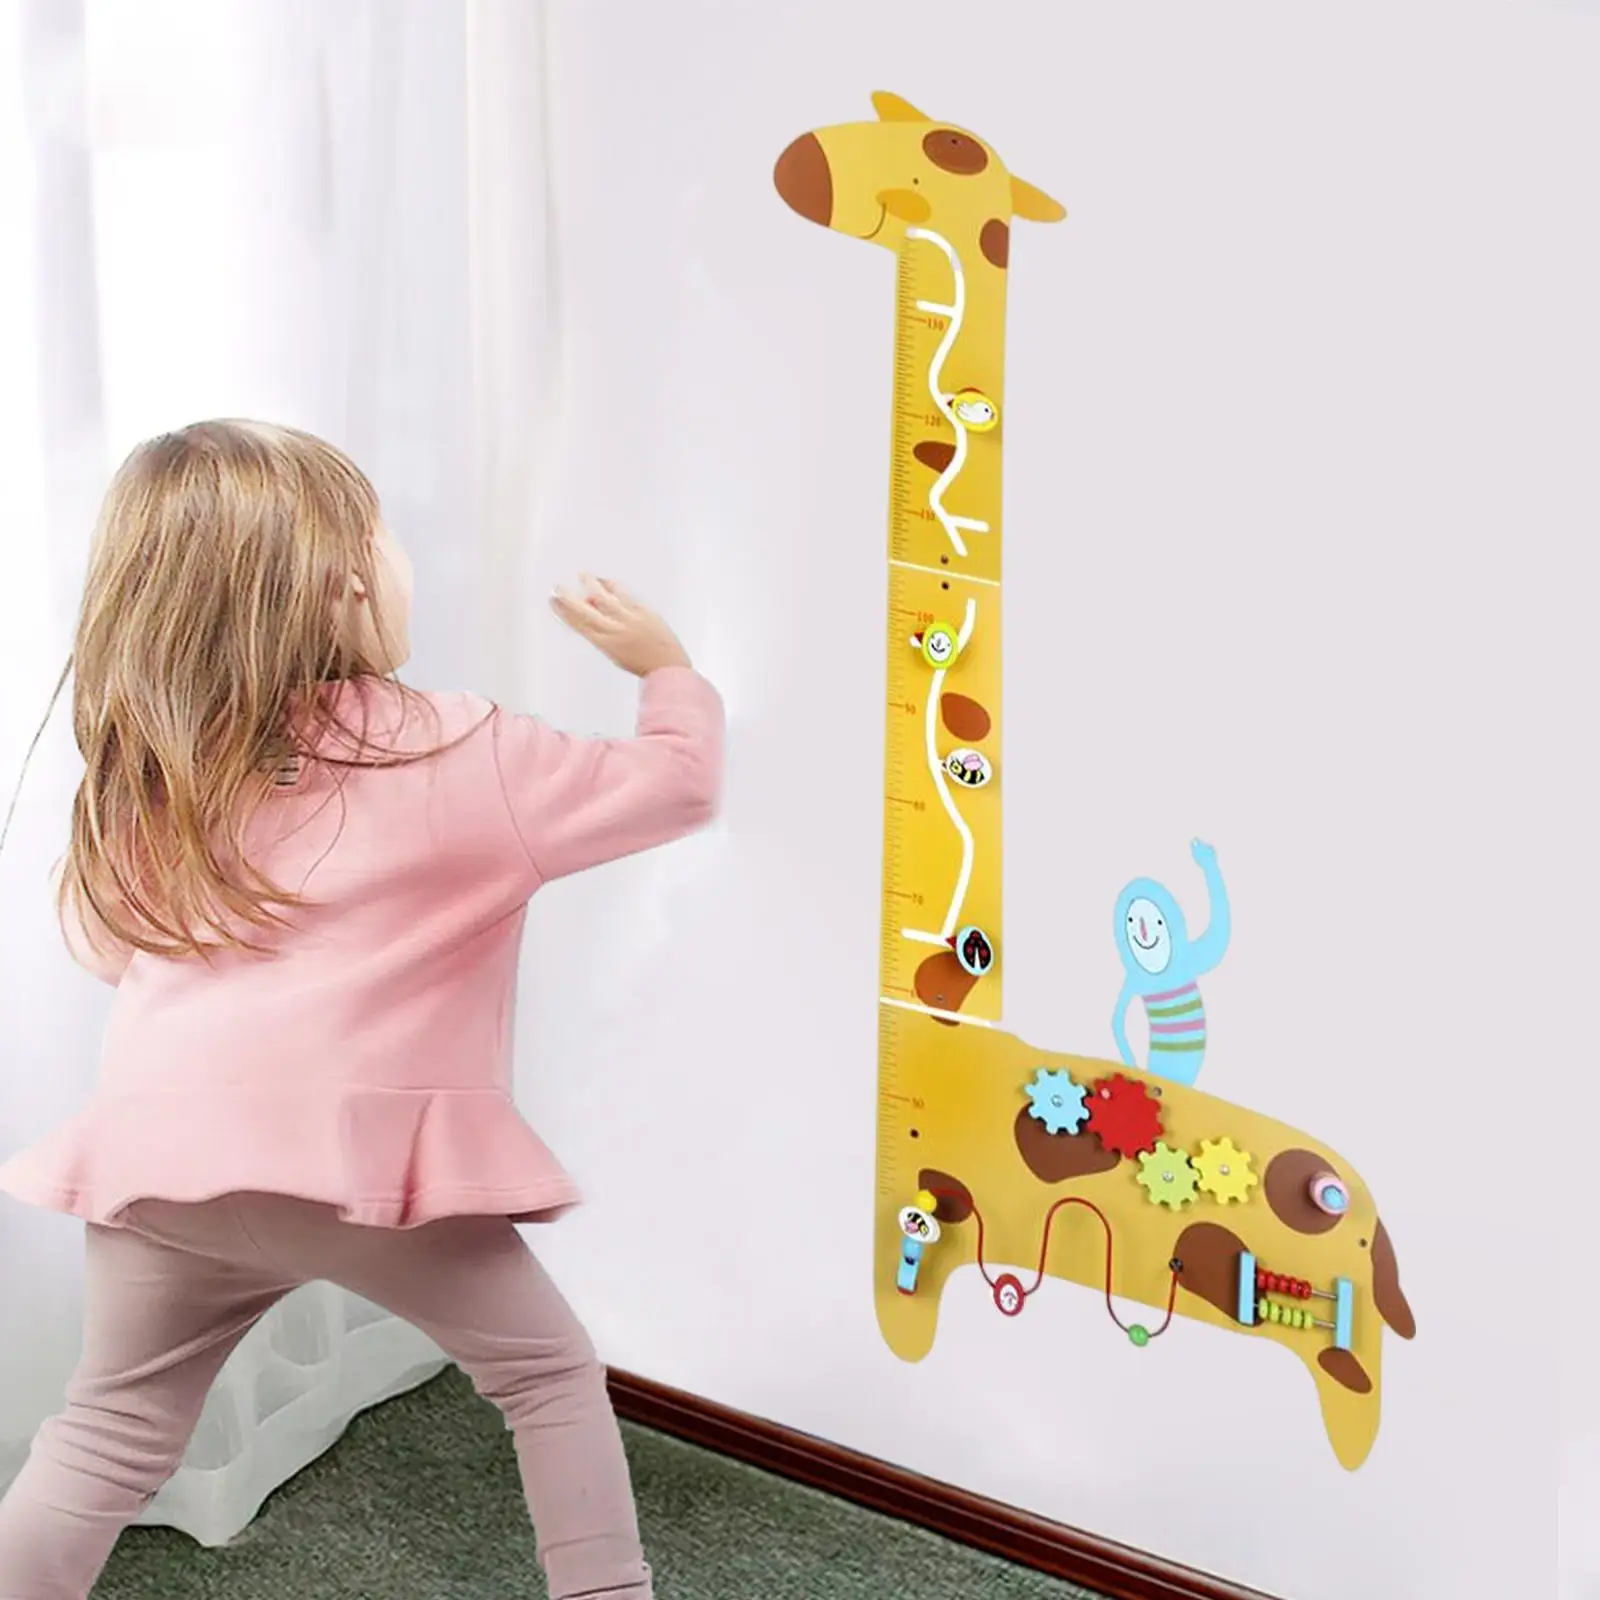 Wall Busy Board Intelligence Development Educational Games for Children Boy